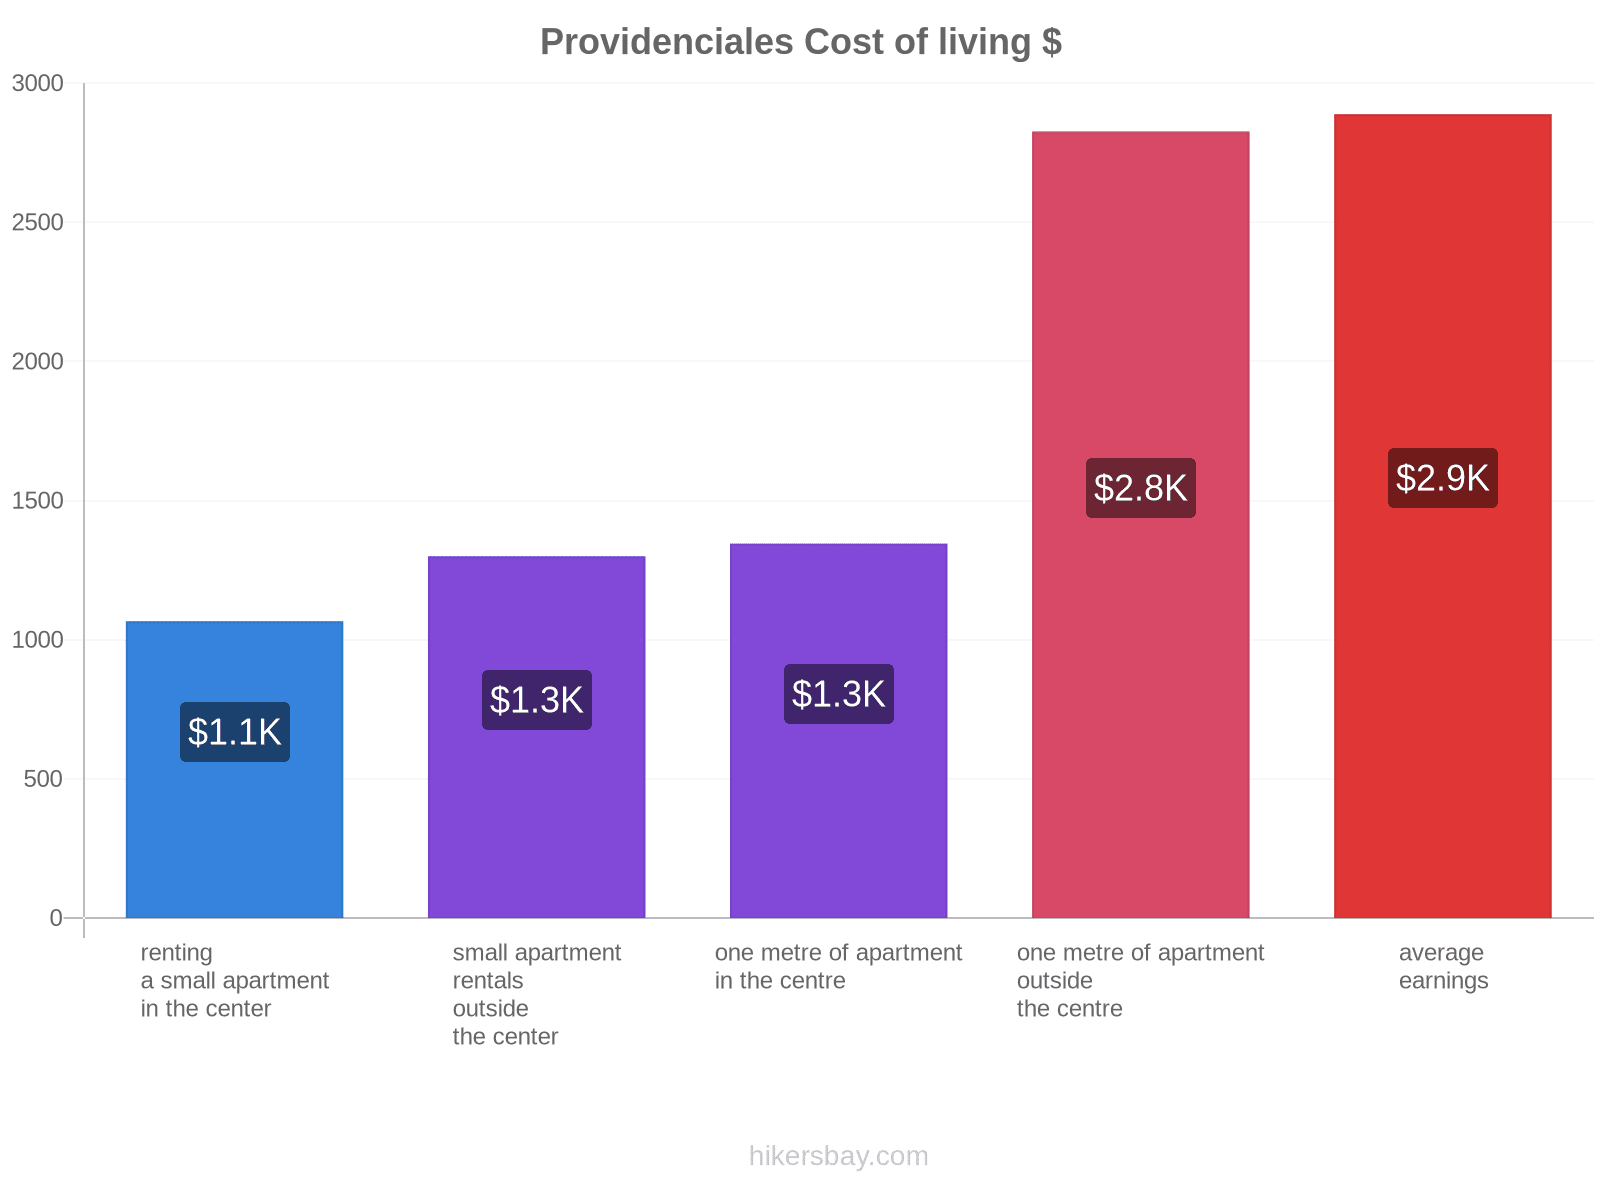 Providenciales cost of living hikersbay.com